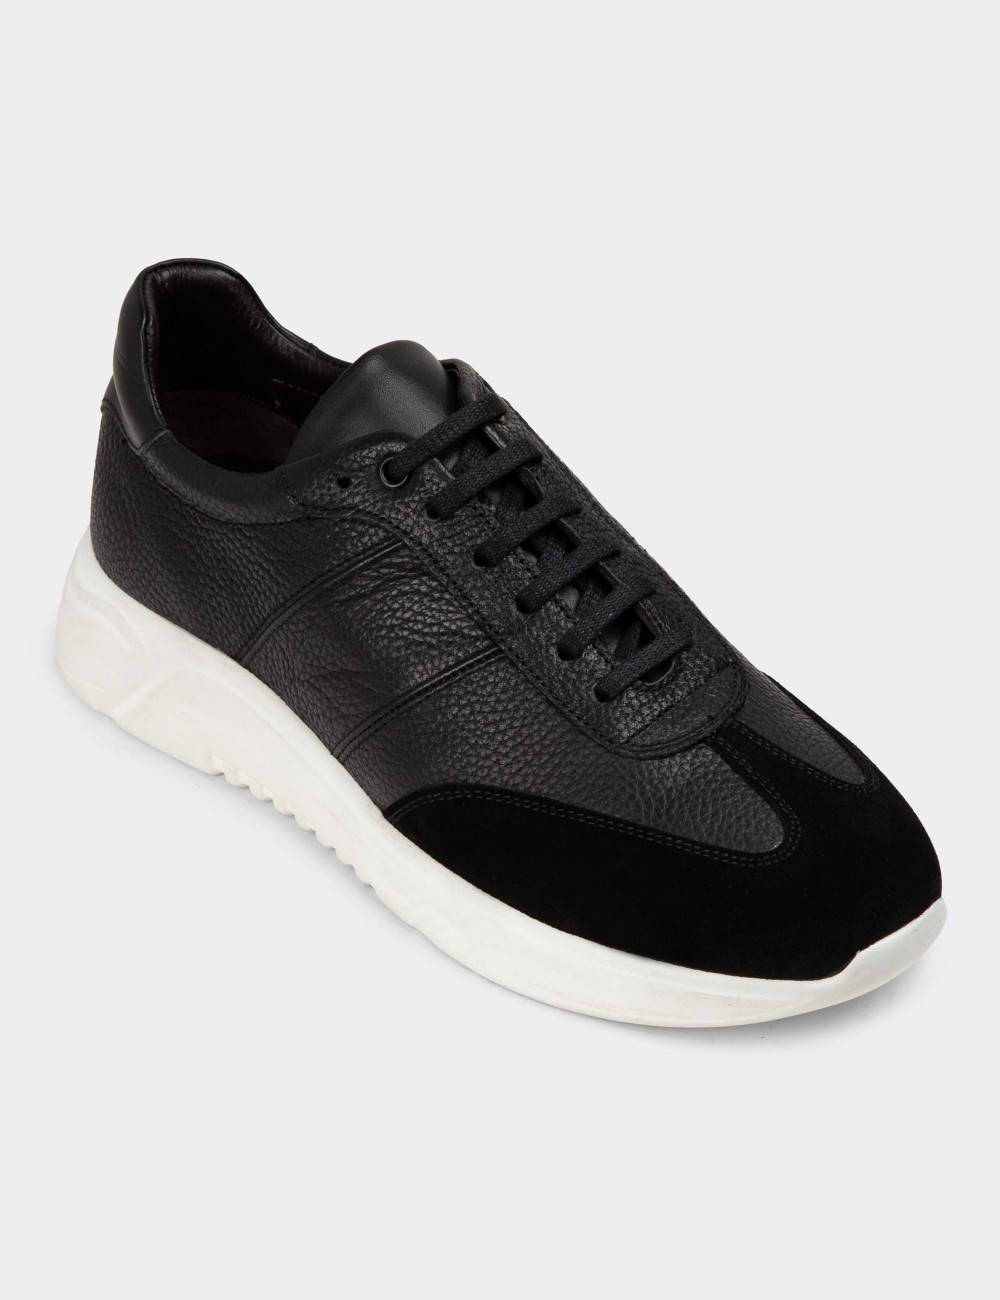 Black Leather Sneakers - 01961MSYHP01